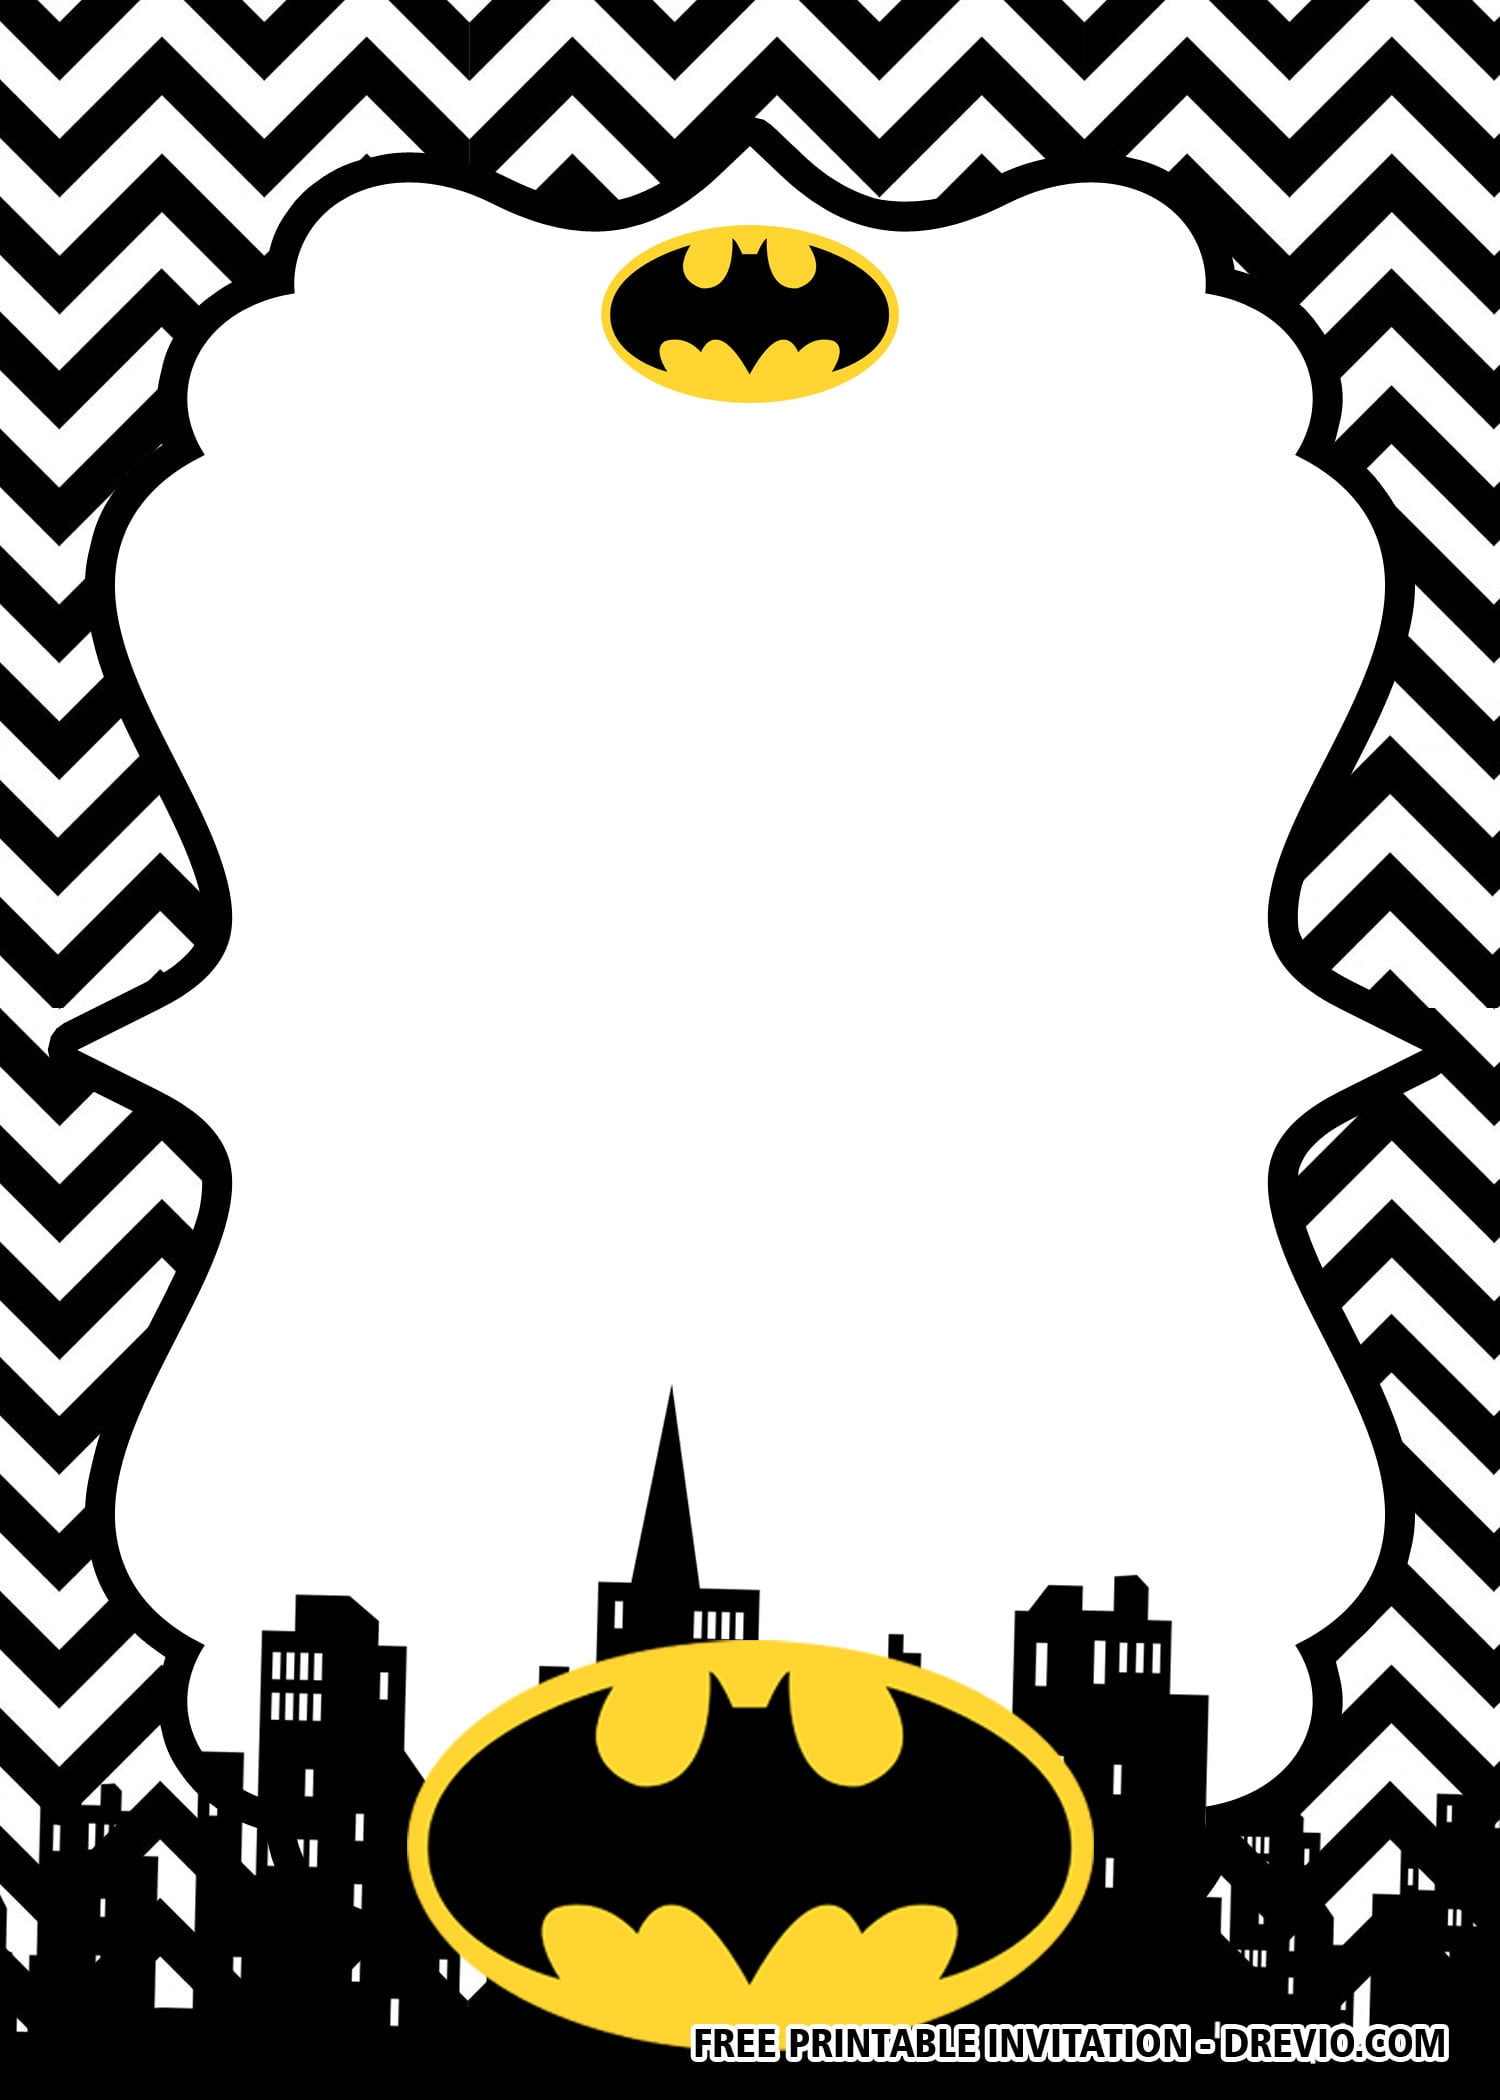 FREE Printable Batman Birthday Invitation Templates  Download With Batman Birthday Card Template